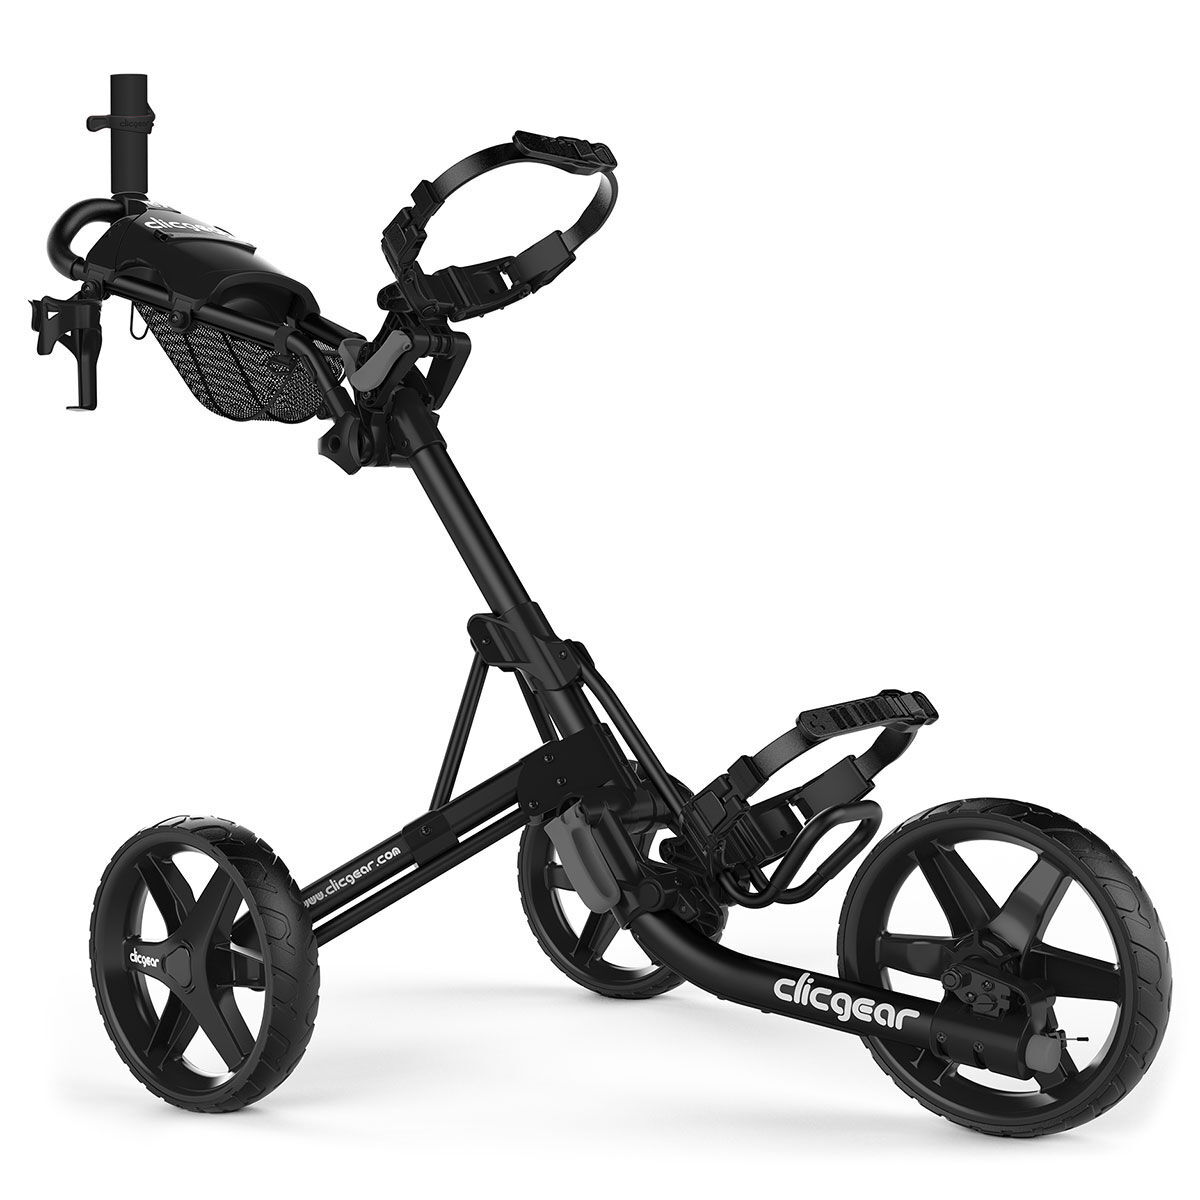 ClicGear Golf Trolley Version 4.0, Black | American Golf von Clicgear